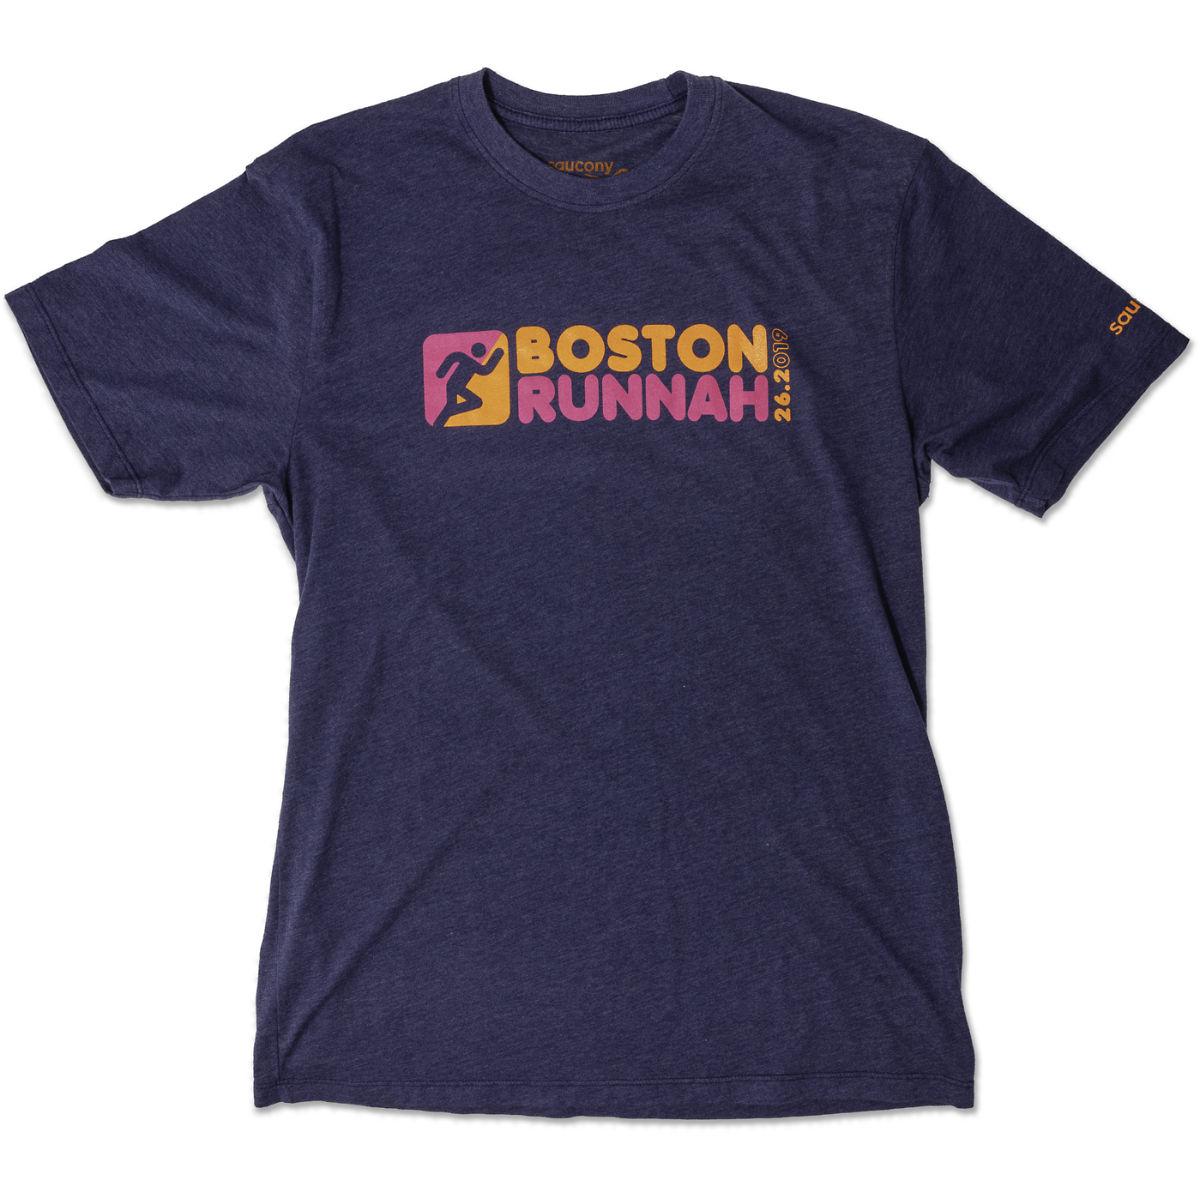 saucony boston t shirt